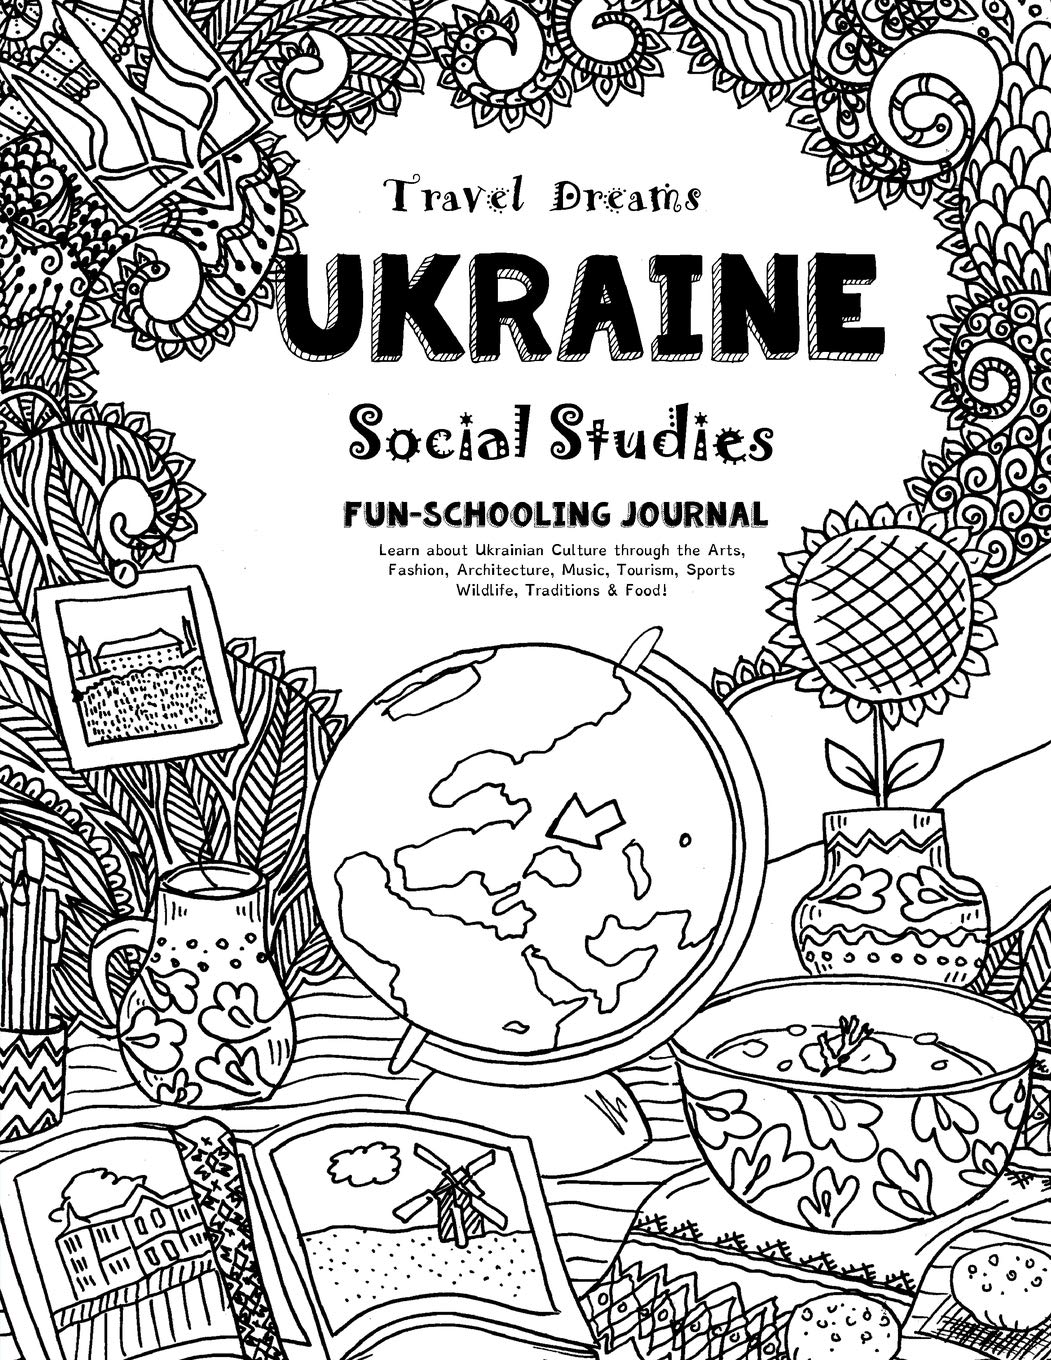 Travel Dreams Ukraine - Social Studies Fun-Schooling Journal: Learn about Ukrainian Culture through the Arts, Fashion, Architecture, Music, Tourism, ... & Food! (Travel Dreams - Social Studies)